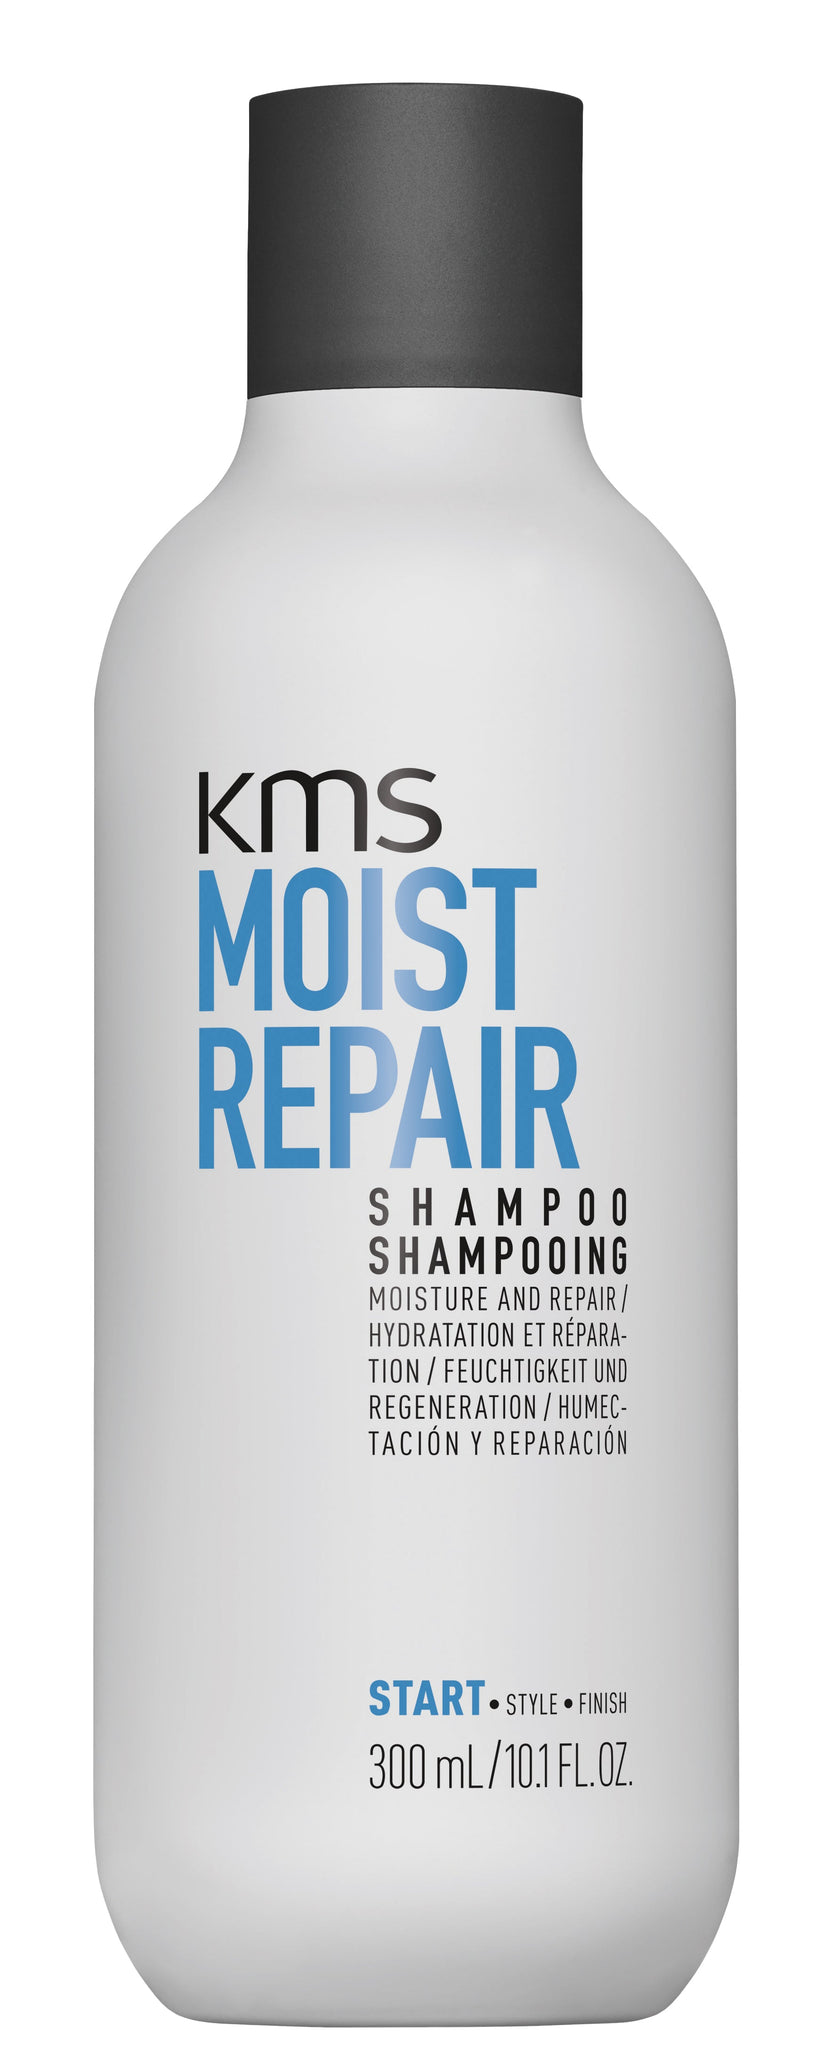 MoistRepair Shampoo Image